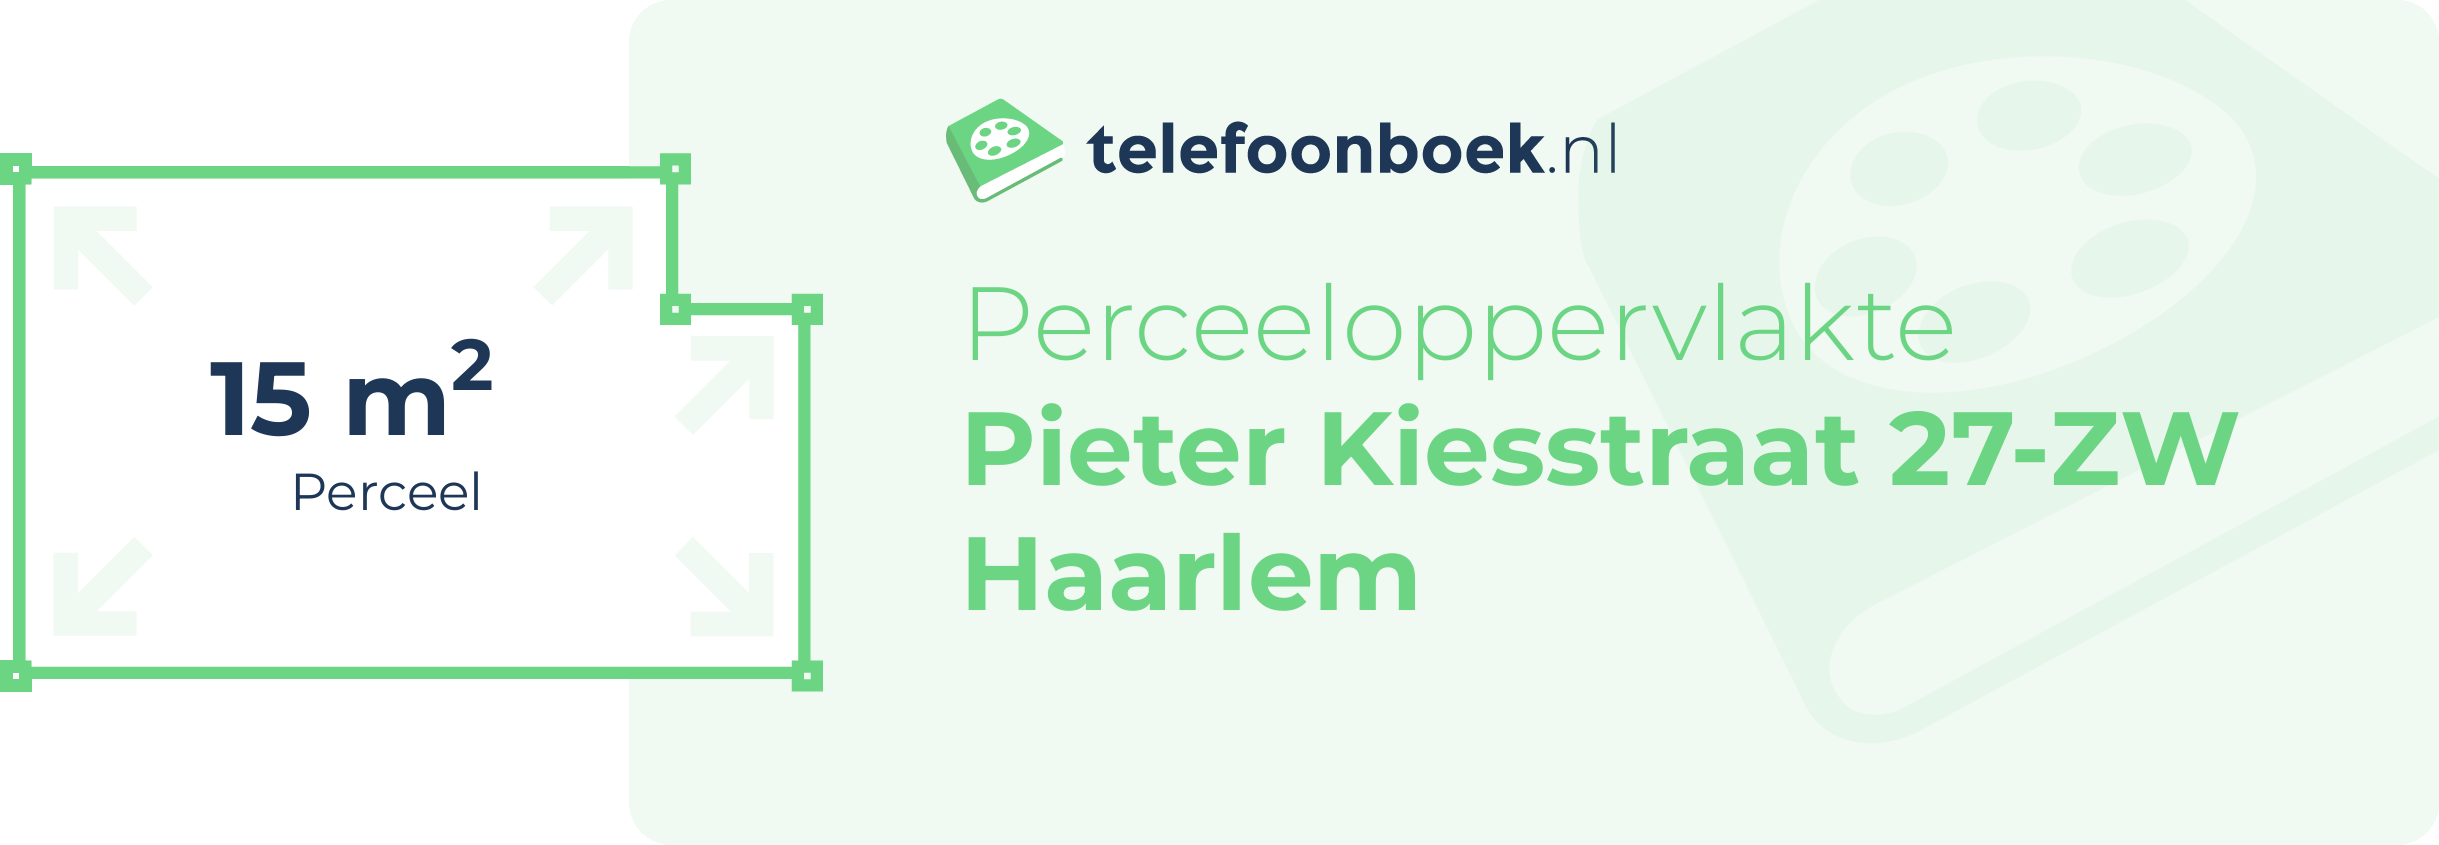 Perceeloppervlakte Pieter Kiesstraat 27-ZW Haarlem